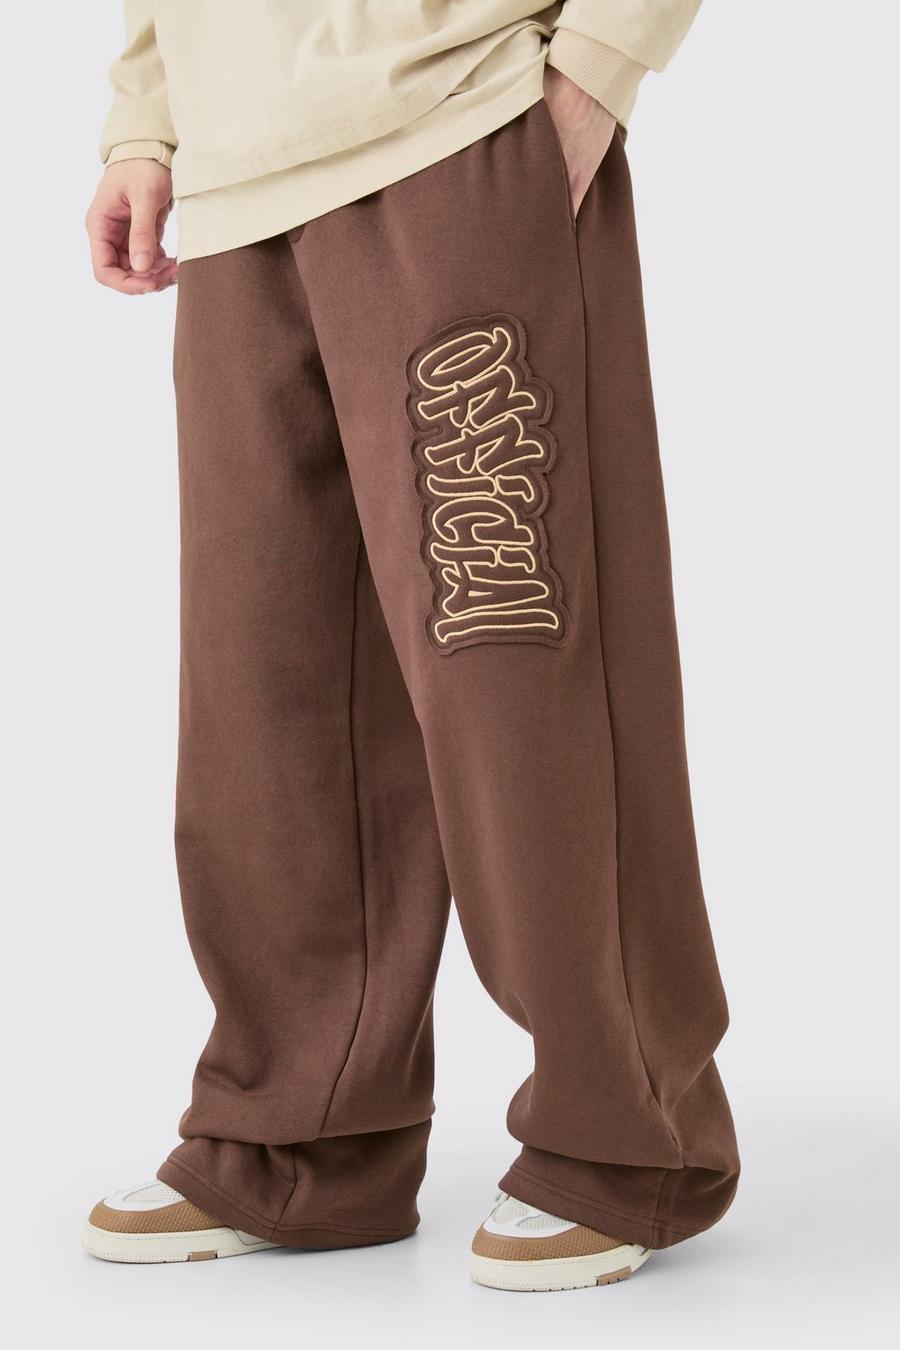 Pantaloni tuta Tall a calzata ampia Official con applique, Chocolate